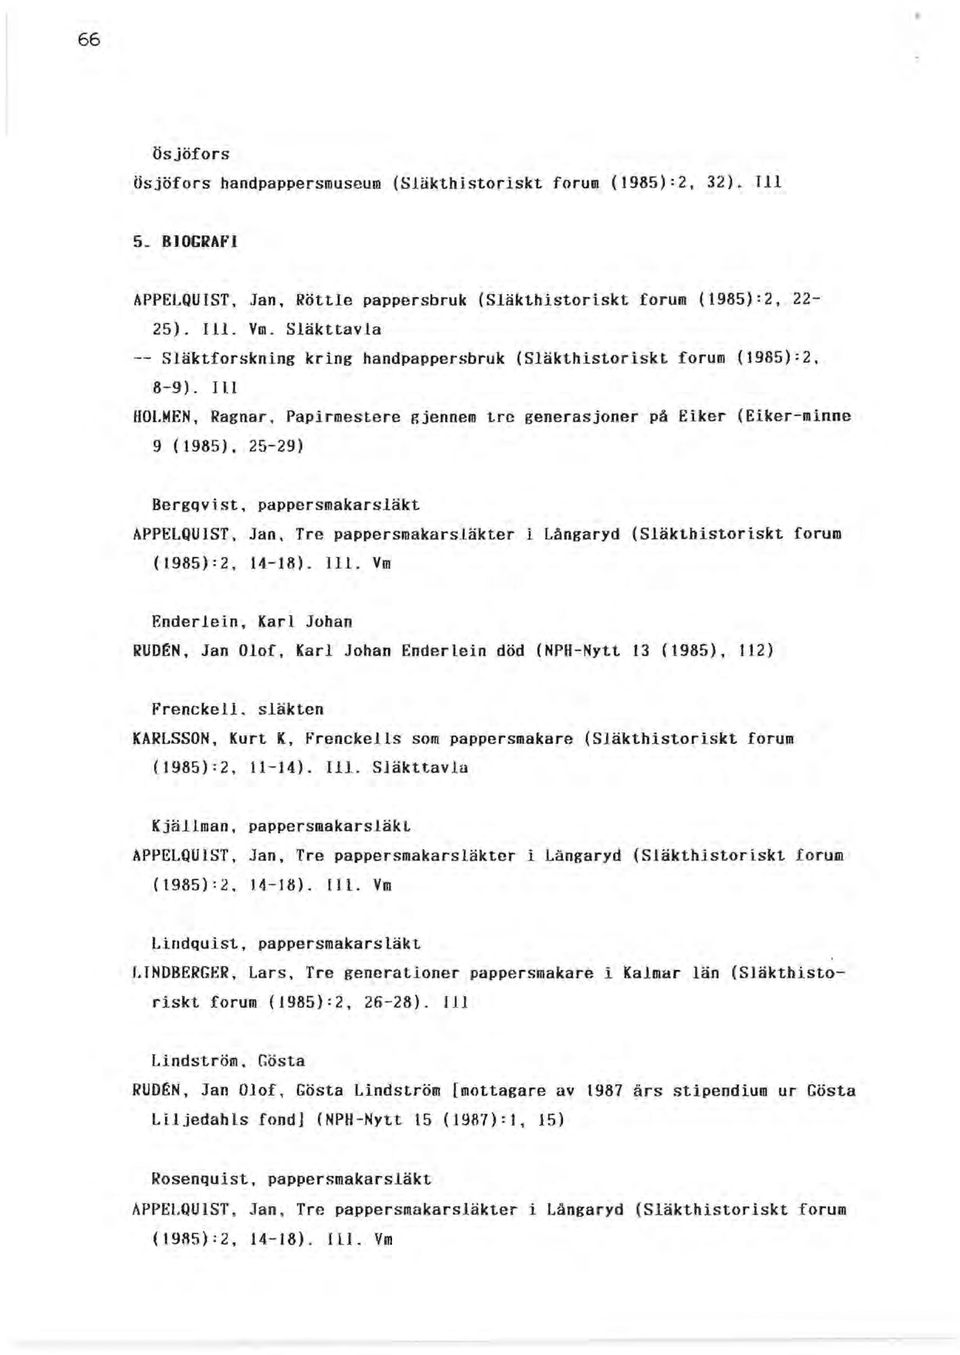 Papirmestere gjennem tre generas joner på Eiker (Eiker-minne 9 (1985), 25-29) Bergqvist, pappersmakarsläkt APPELQUIST, Jan, Tre pappersmakars.läkter i Långaryd (Släkthistoriskt forum (1985):2, 14-18).